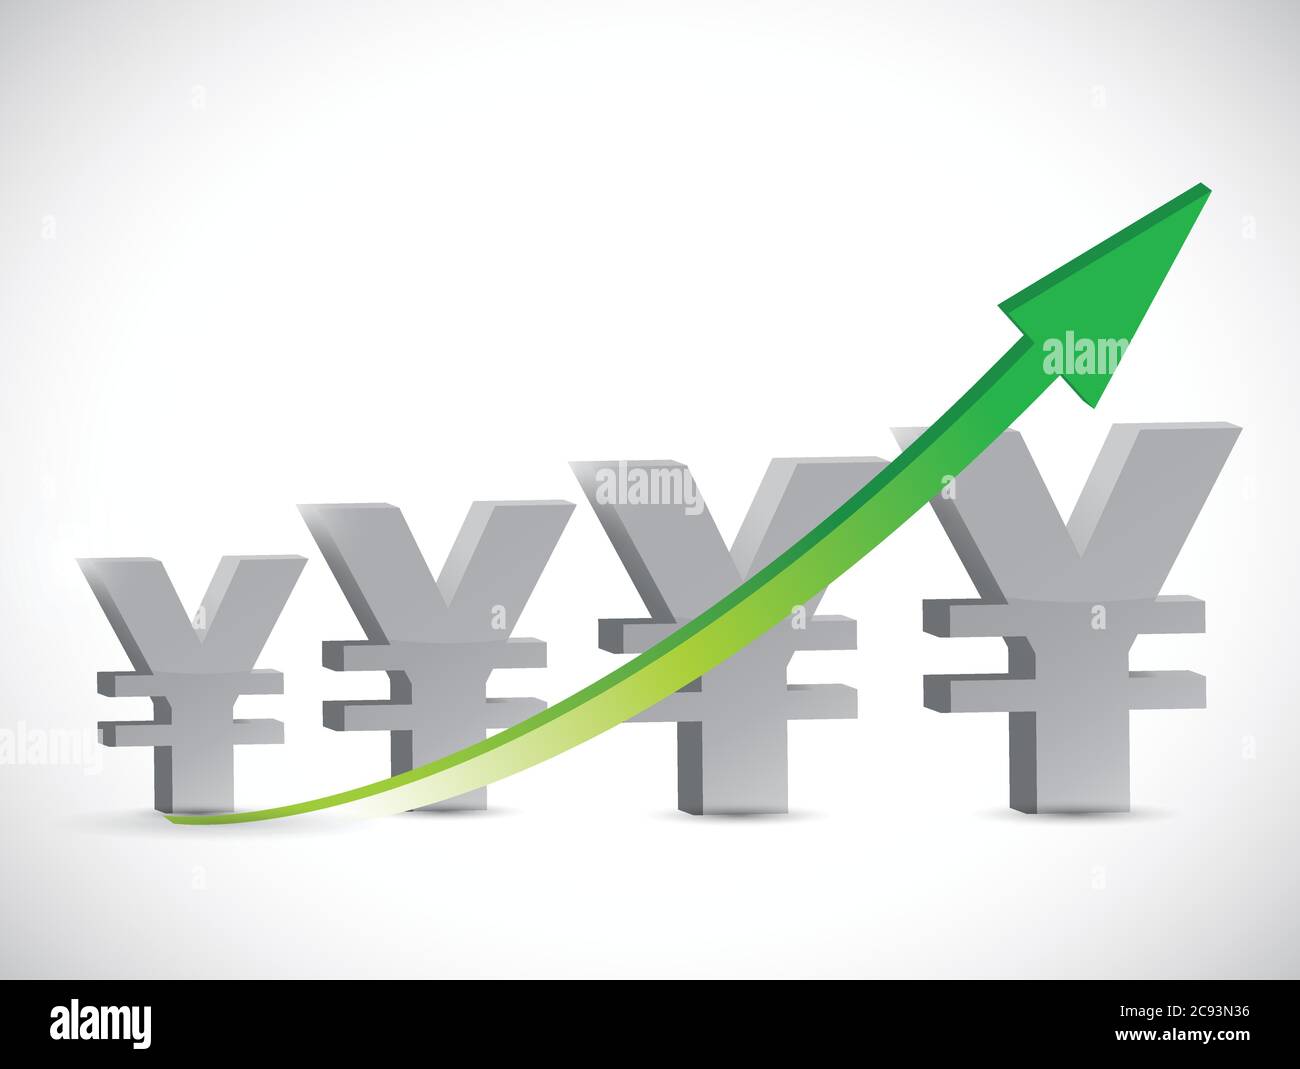 Yen arrow up illustration design over a white background Stock Vector